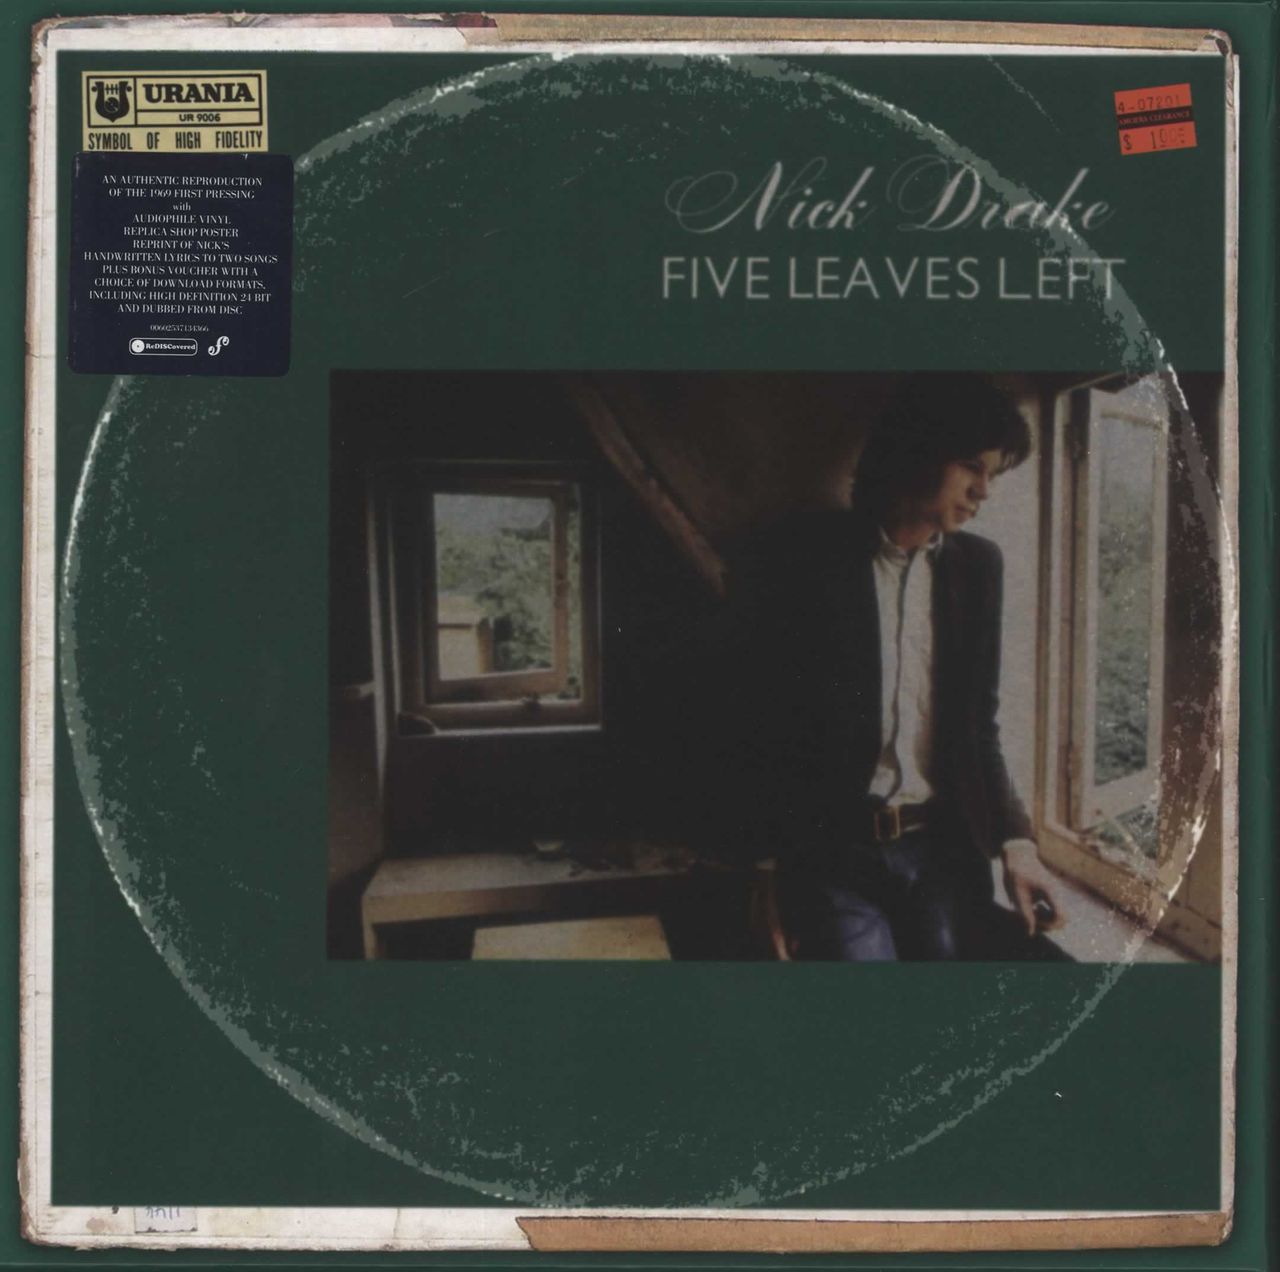 Nick Drake Five Leaves Left - 180gm UK Vinyl box set — RareVinyl.com